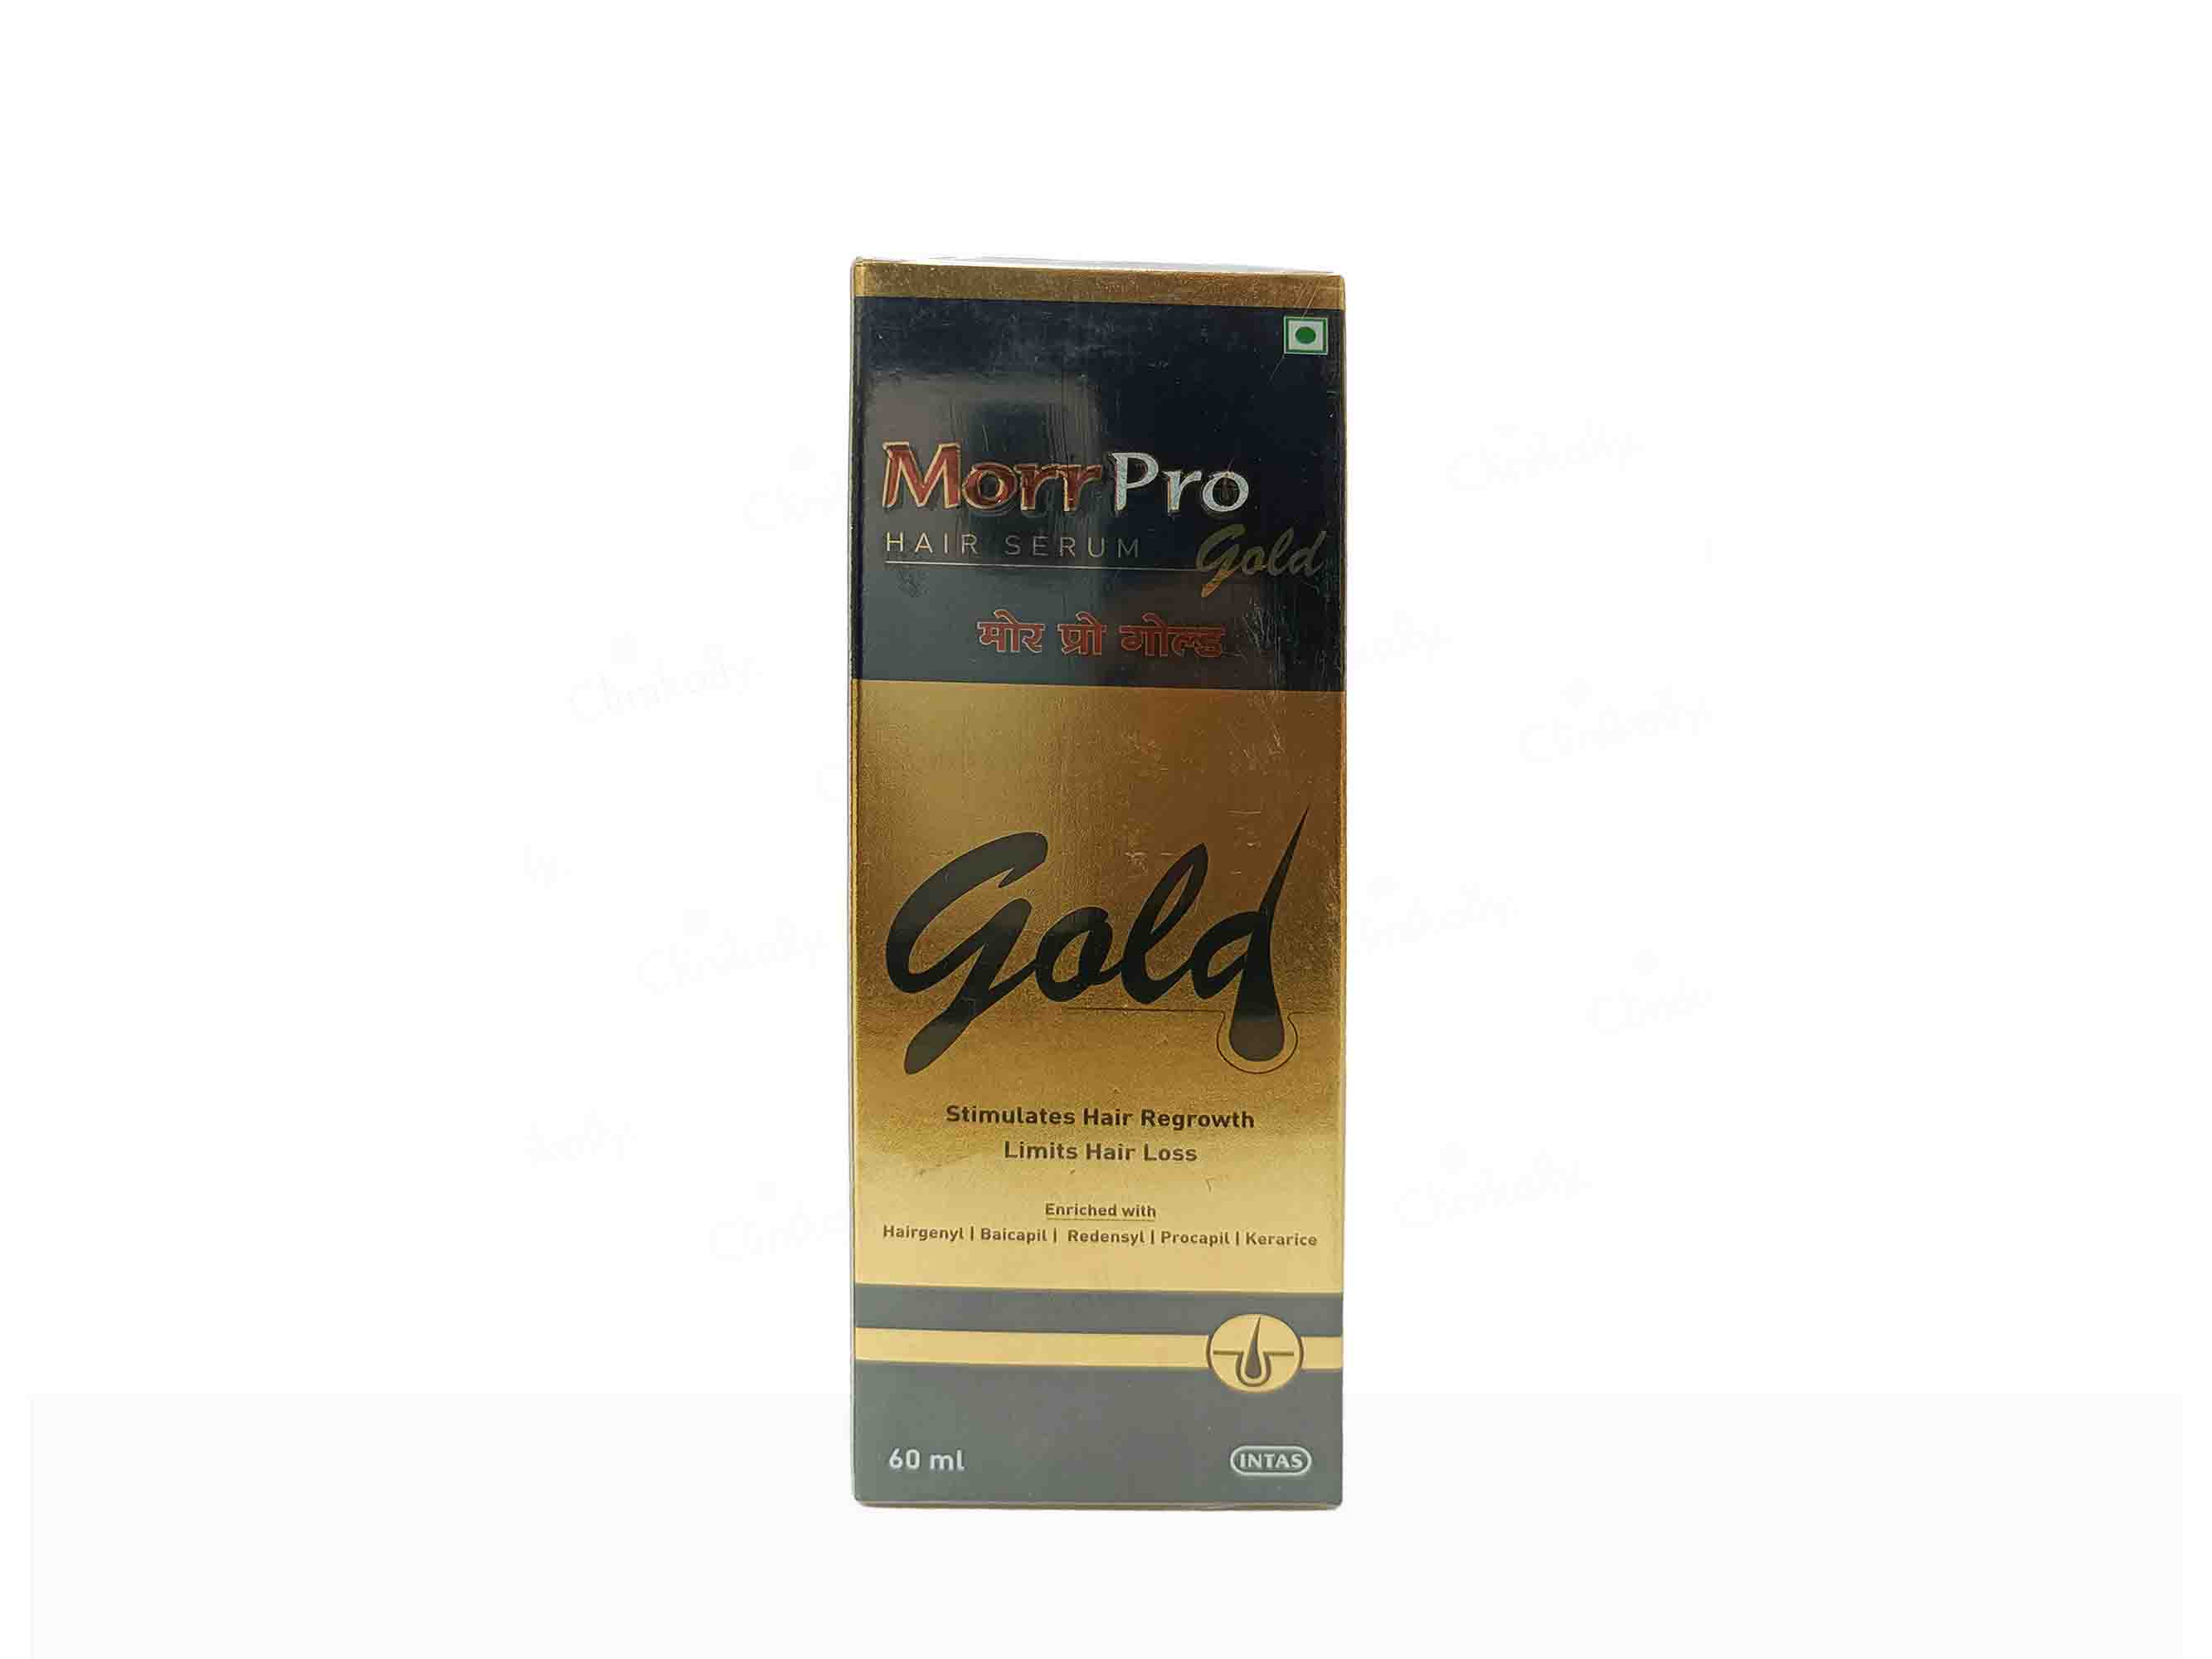 Morr Pro Gold Hair Serum - Clinikally